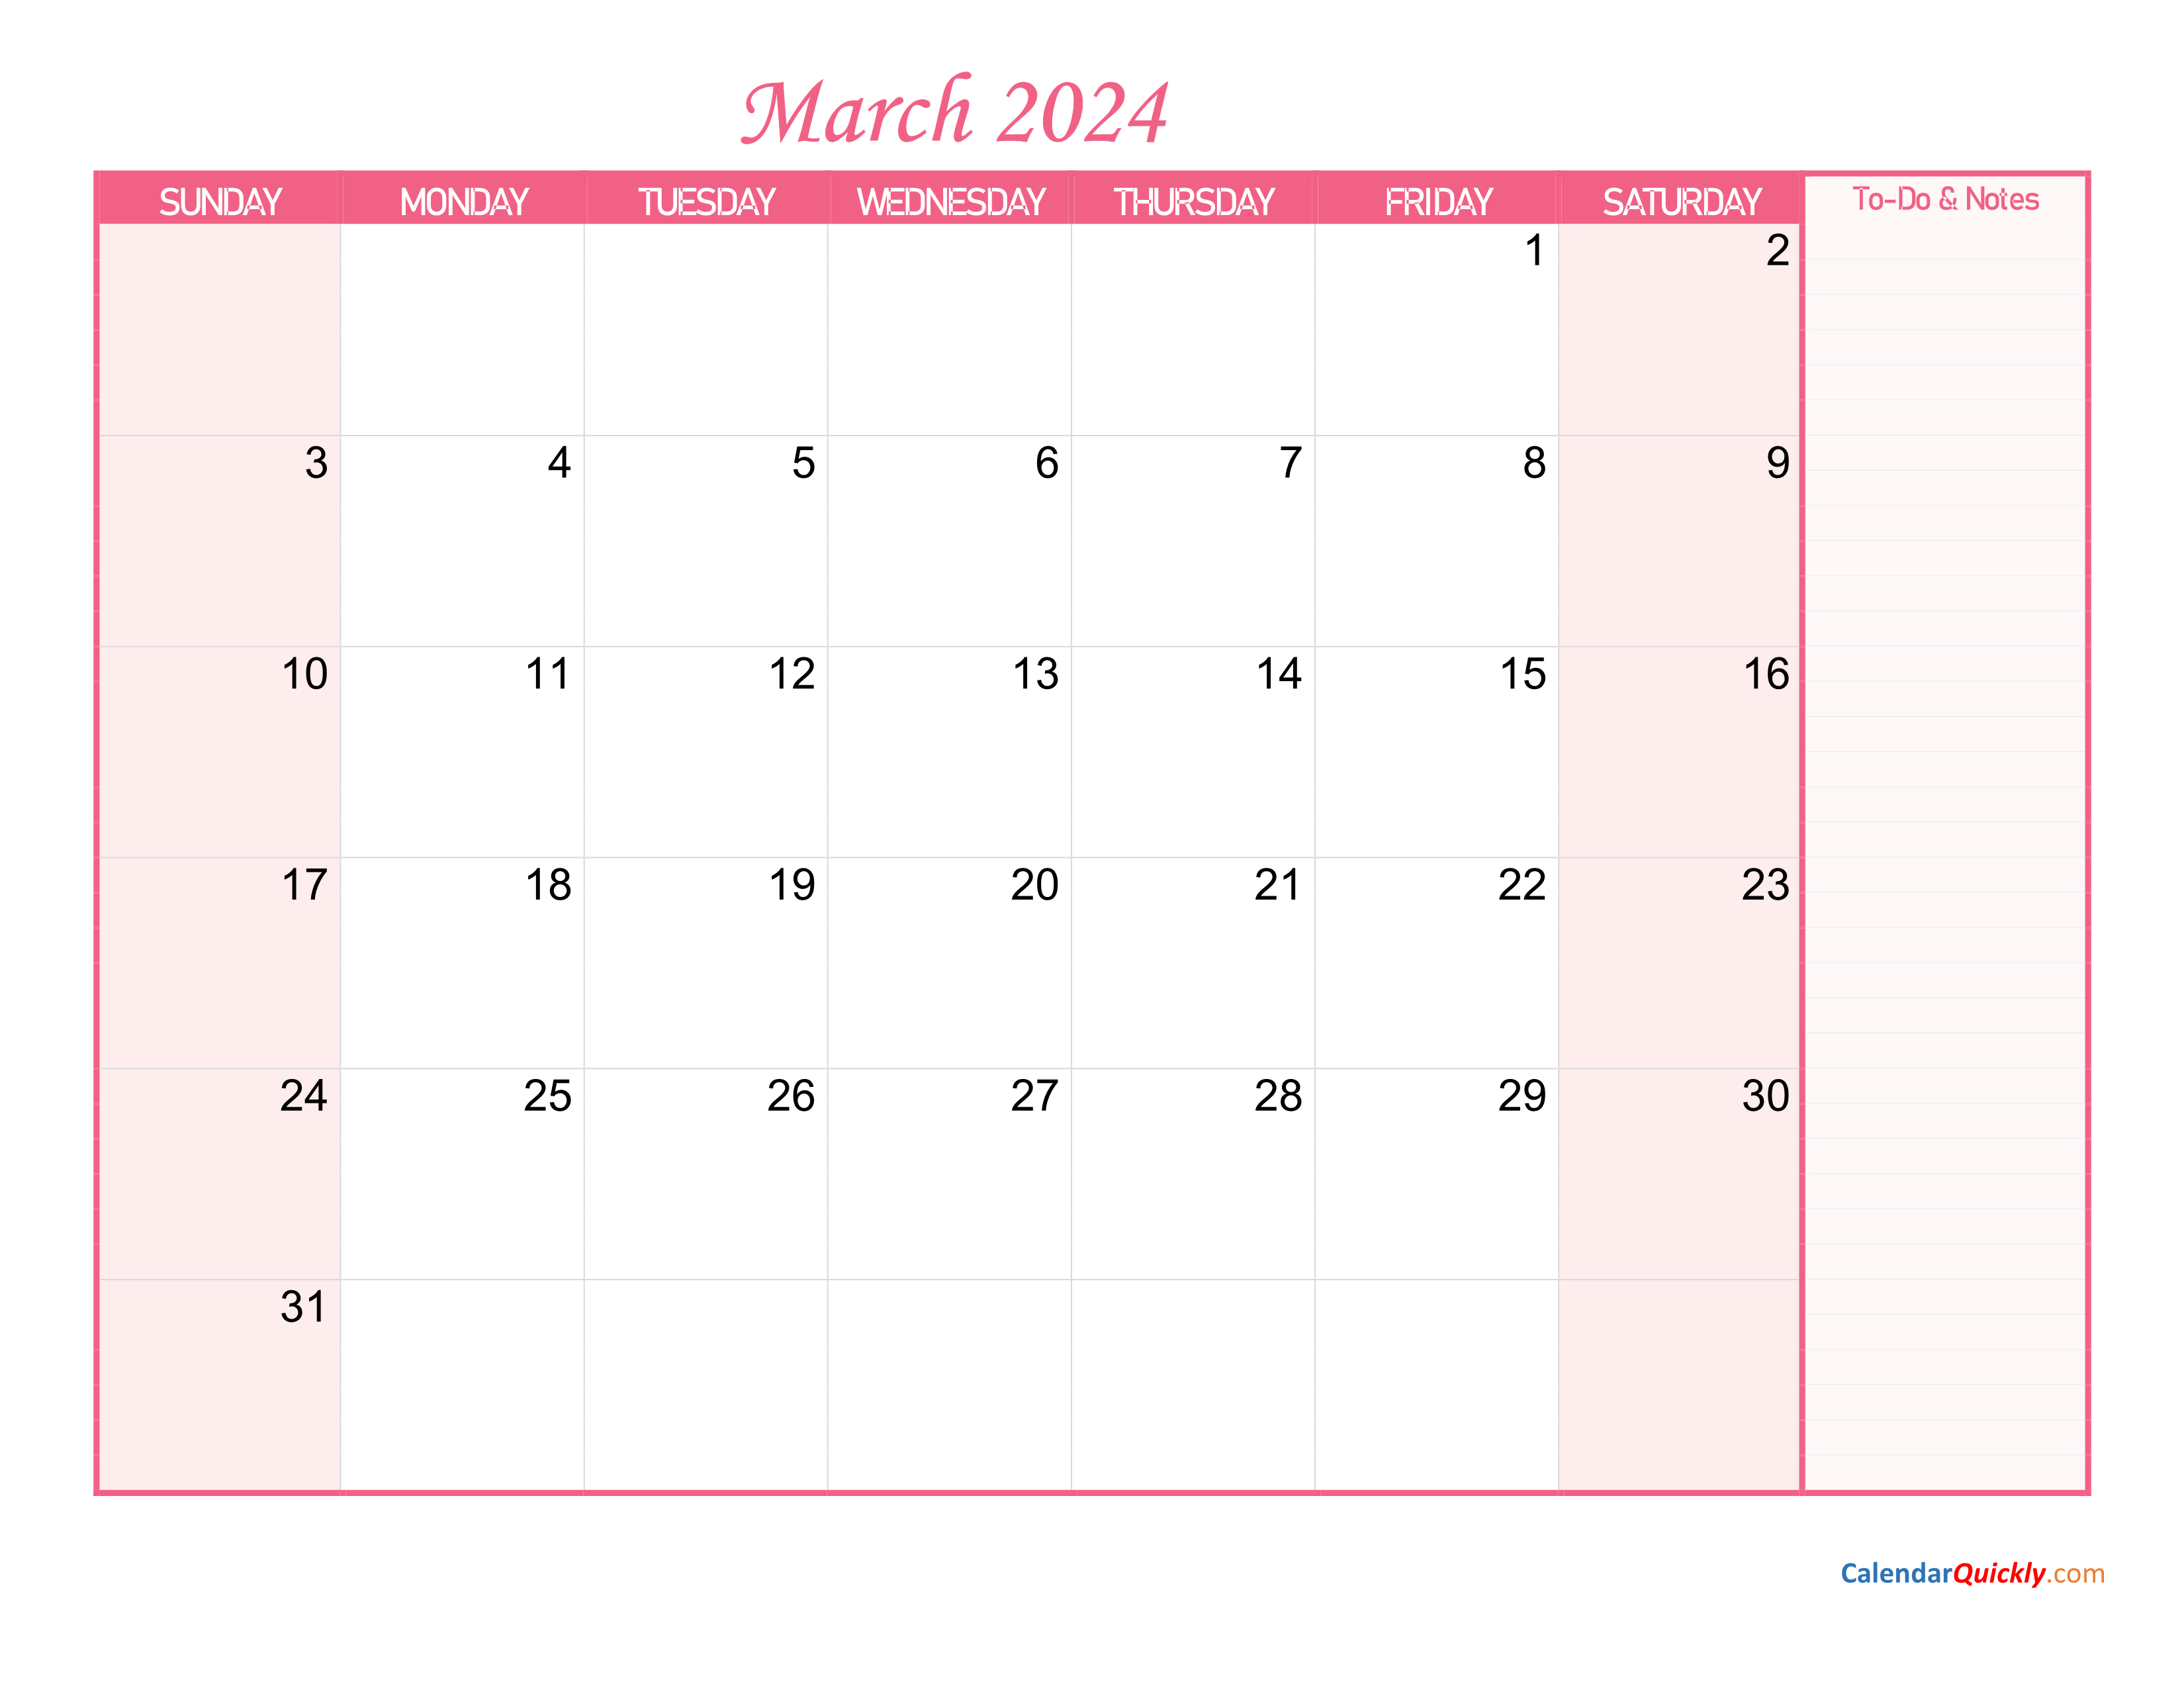 March Calendar 2024 with Notes Calendar Quickly